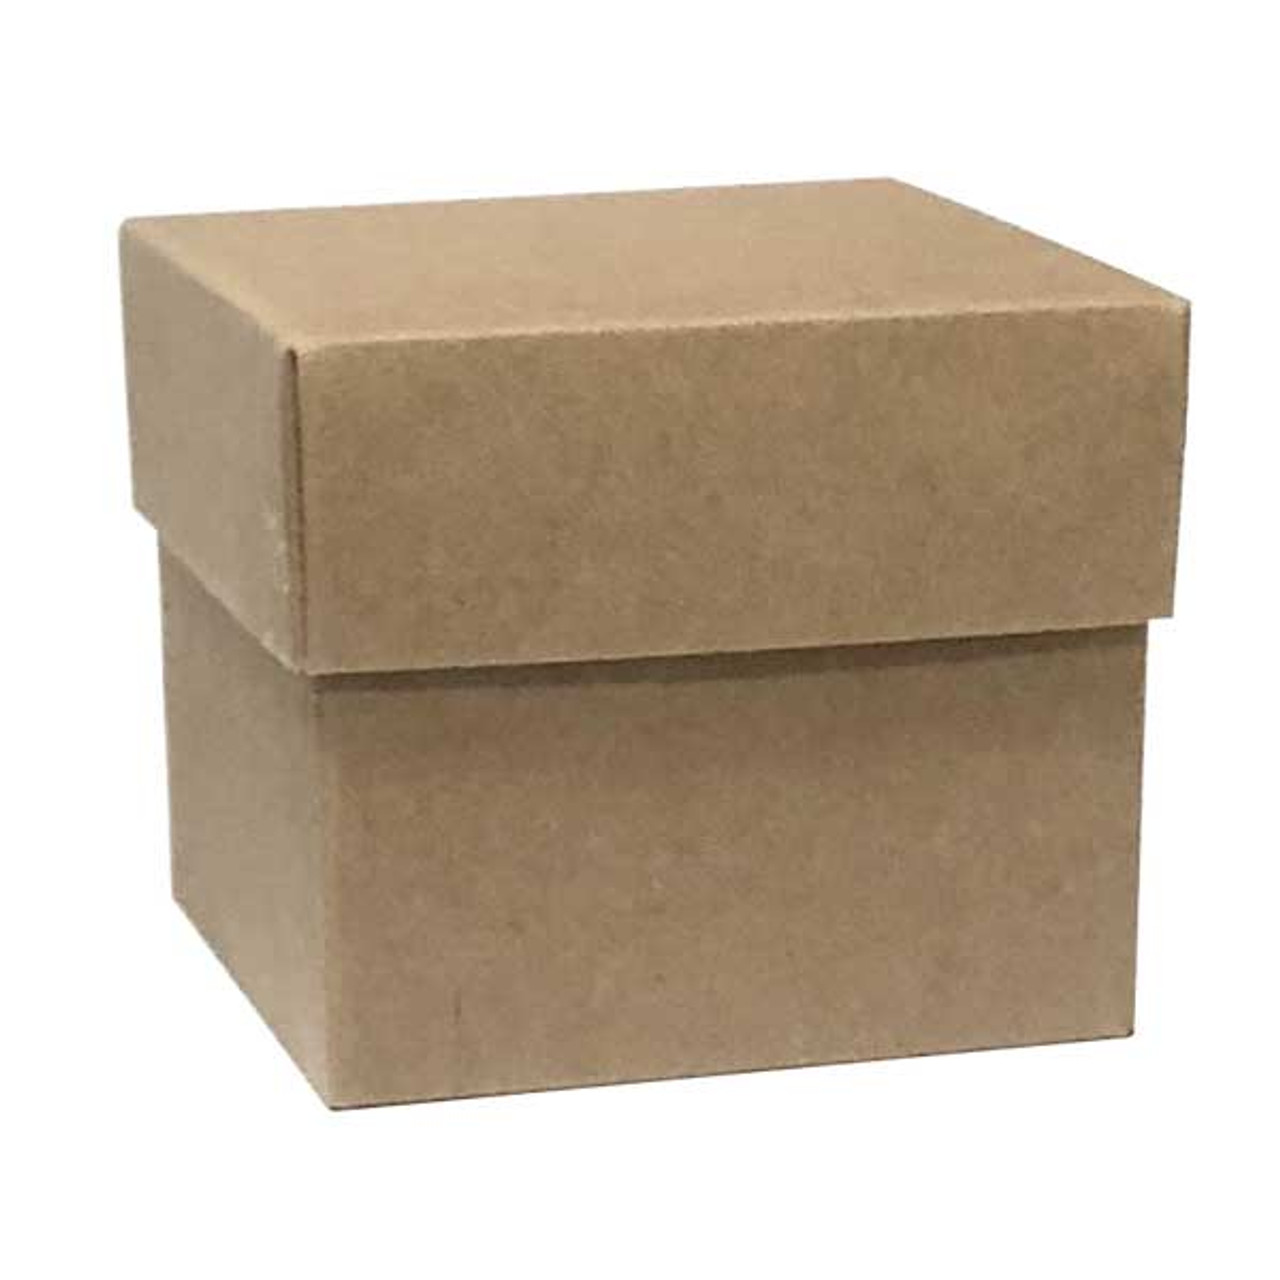 6"x6"x4" Deluxe Gourmet Gift Box-Kraft